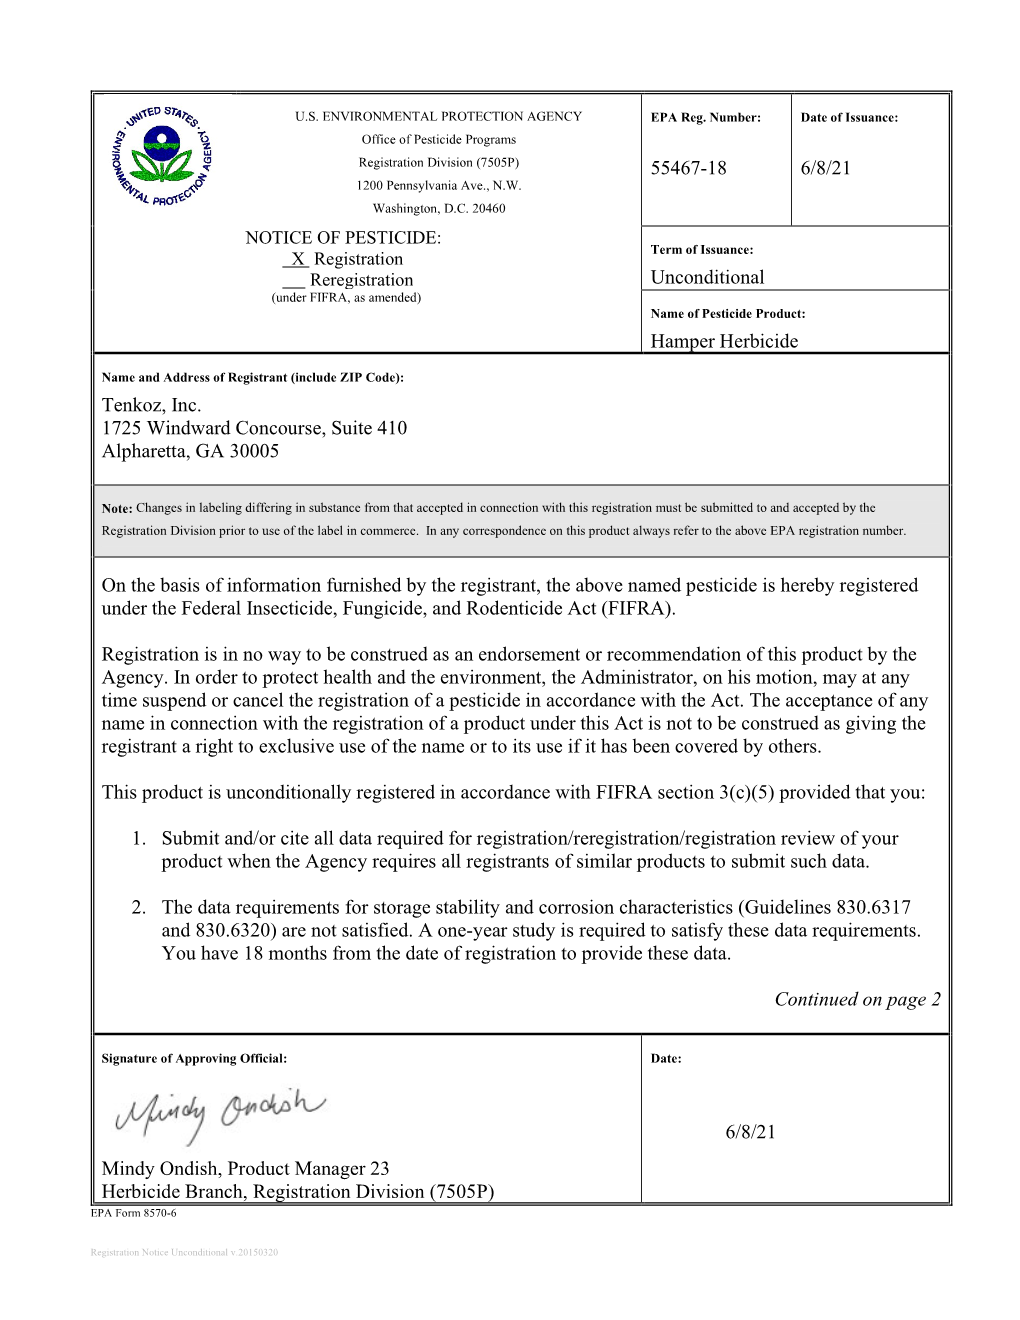 US EPA, Pesticide Product Label, Hamper Herbicide,06/08/2021